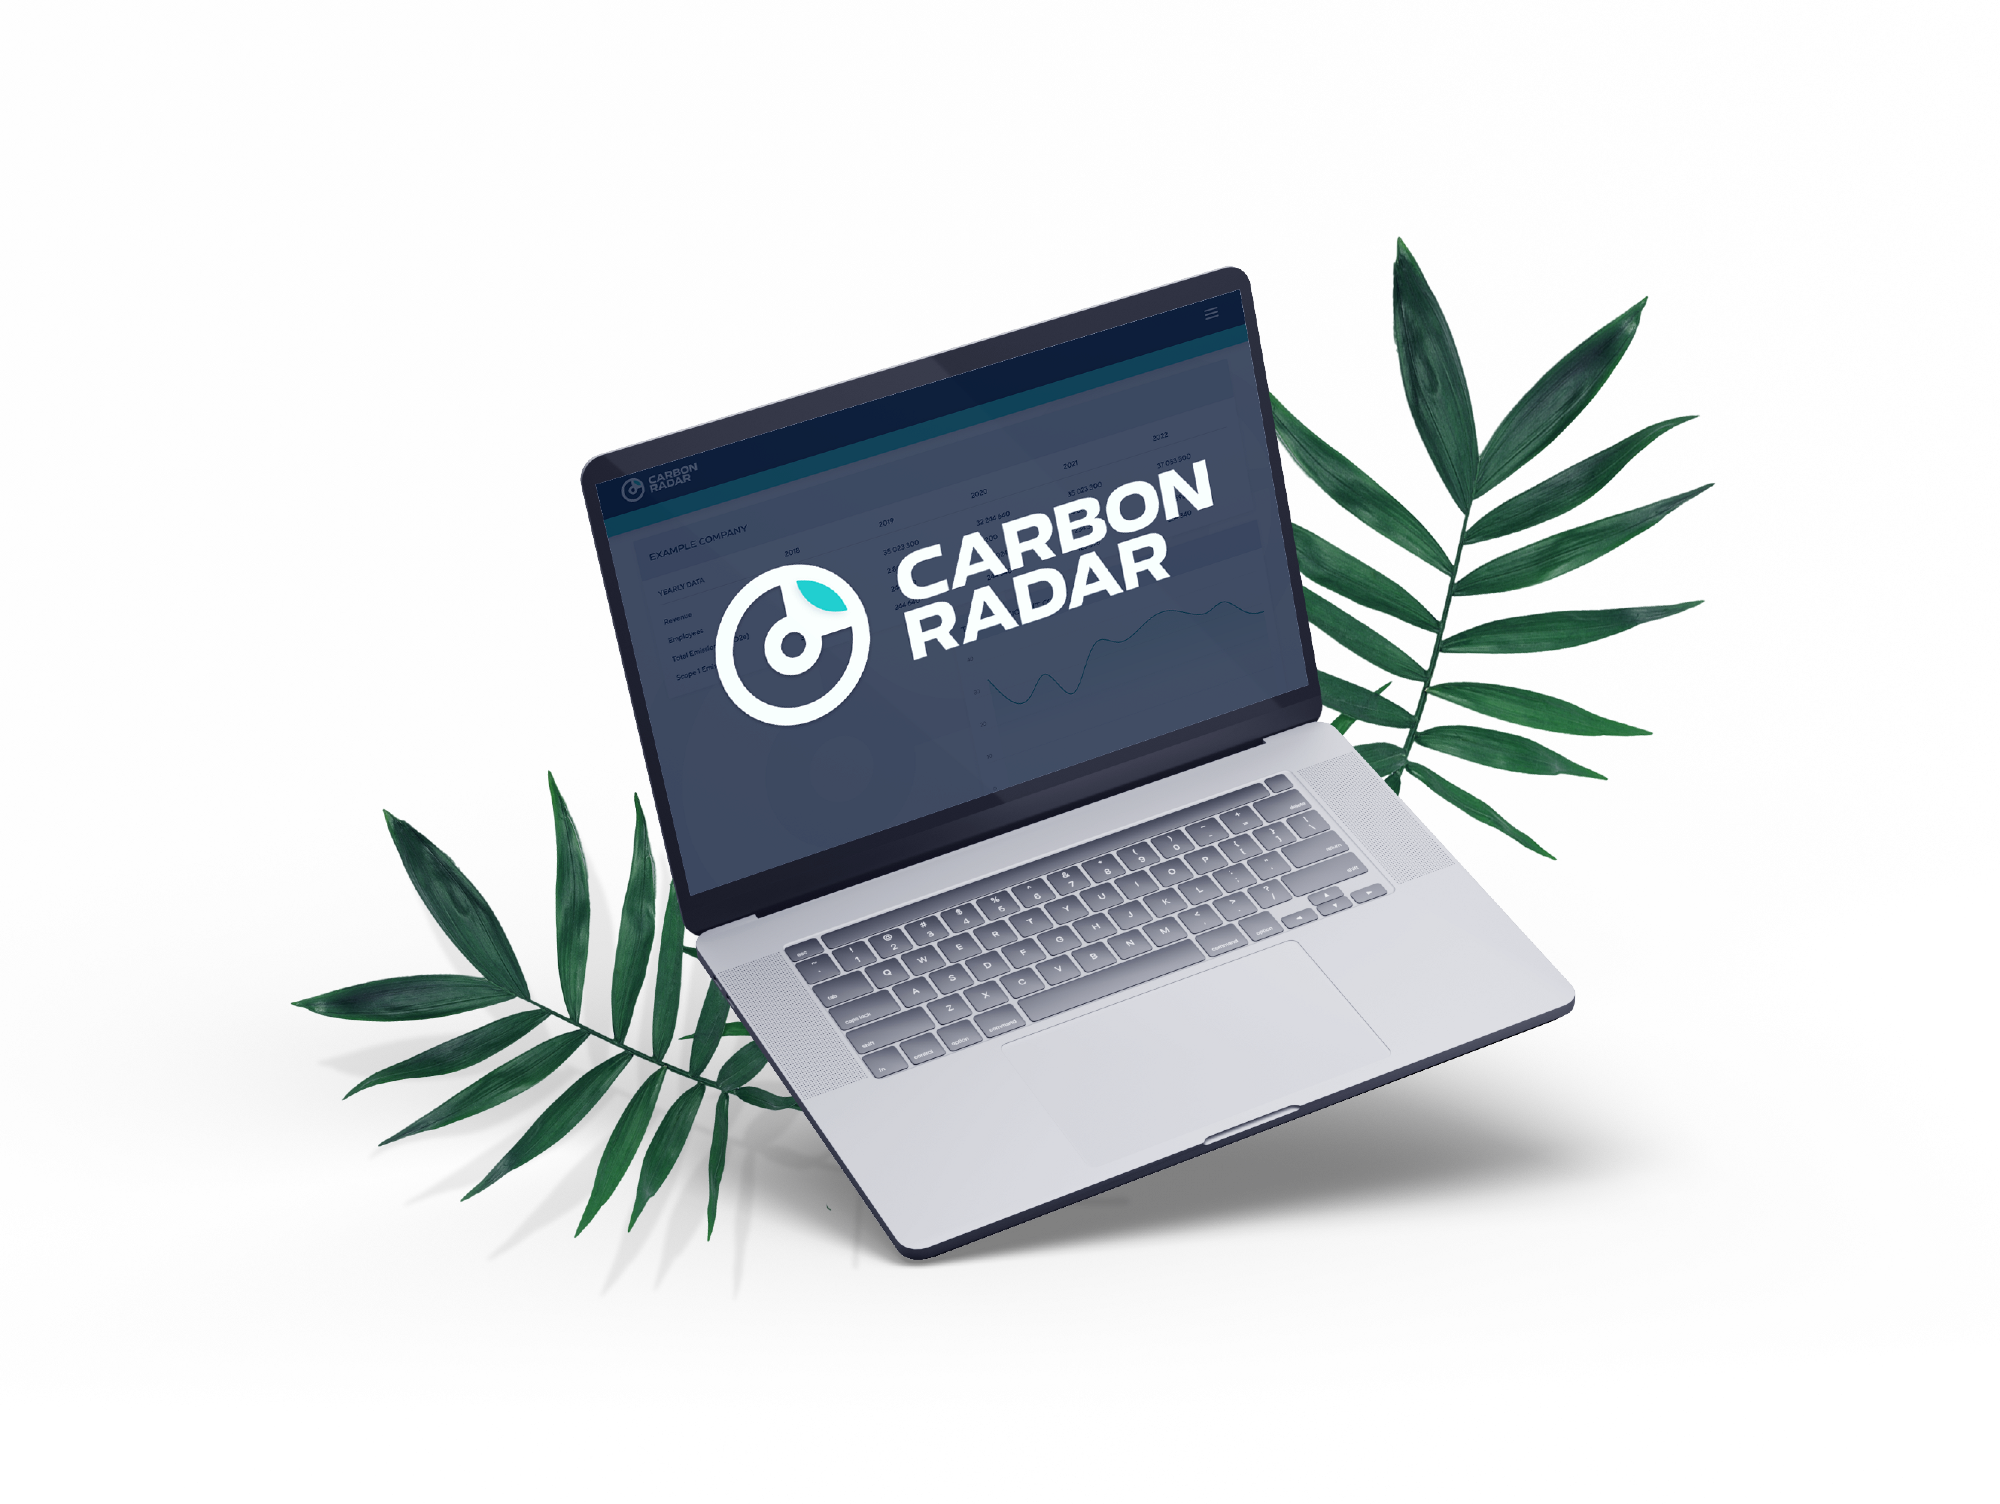 Carbon Radar on laptop